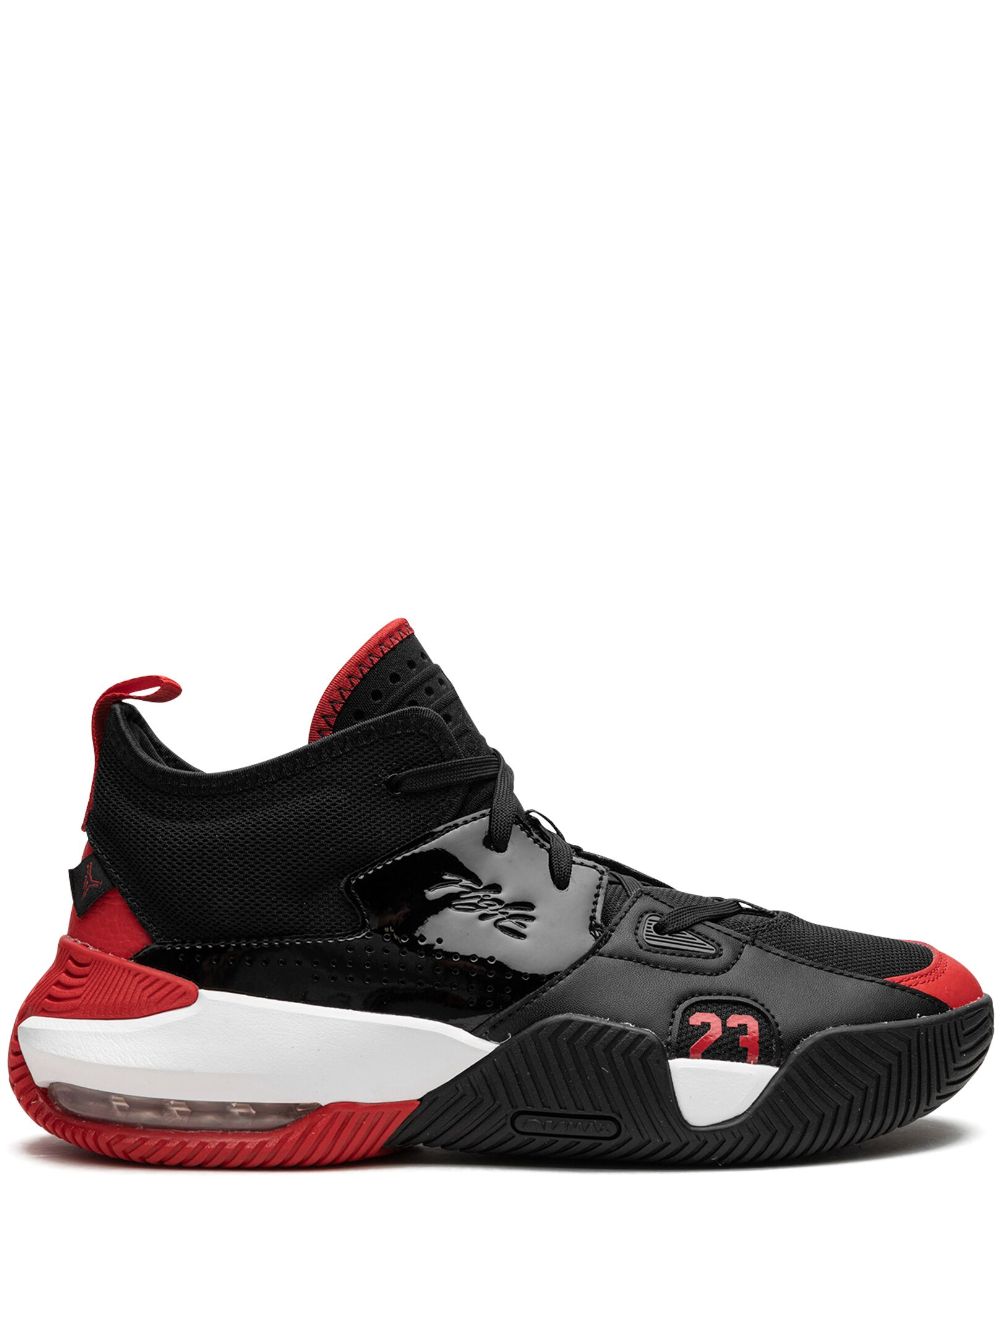 Jordan Stay Loyal high-top sneakers - Black